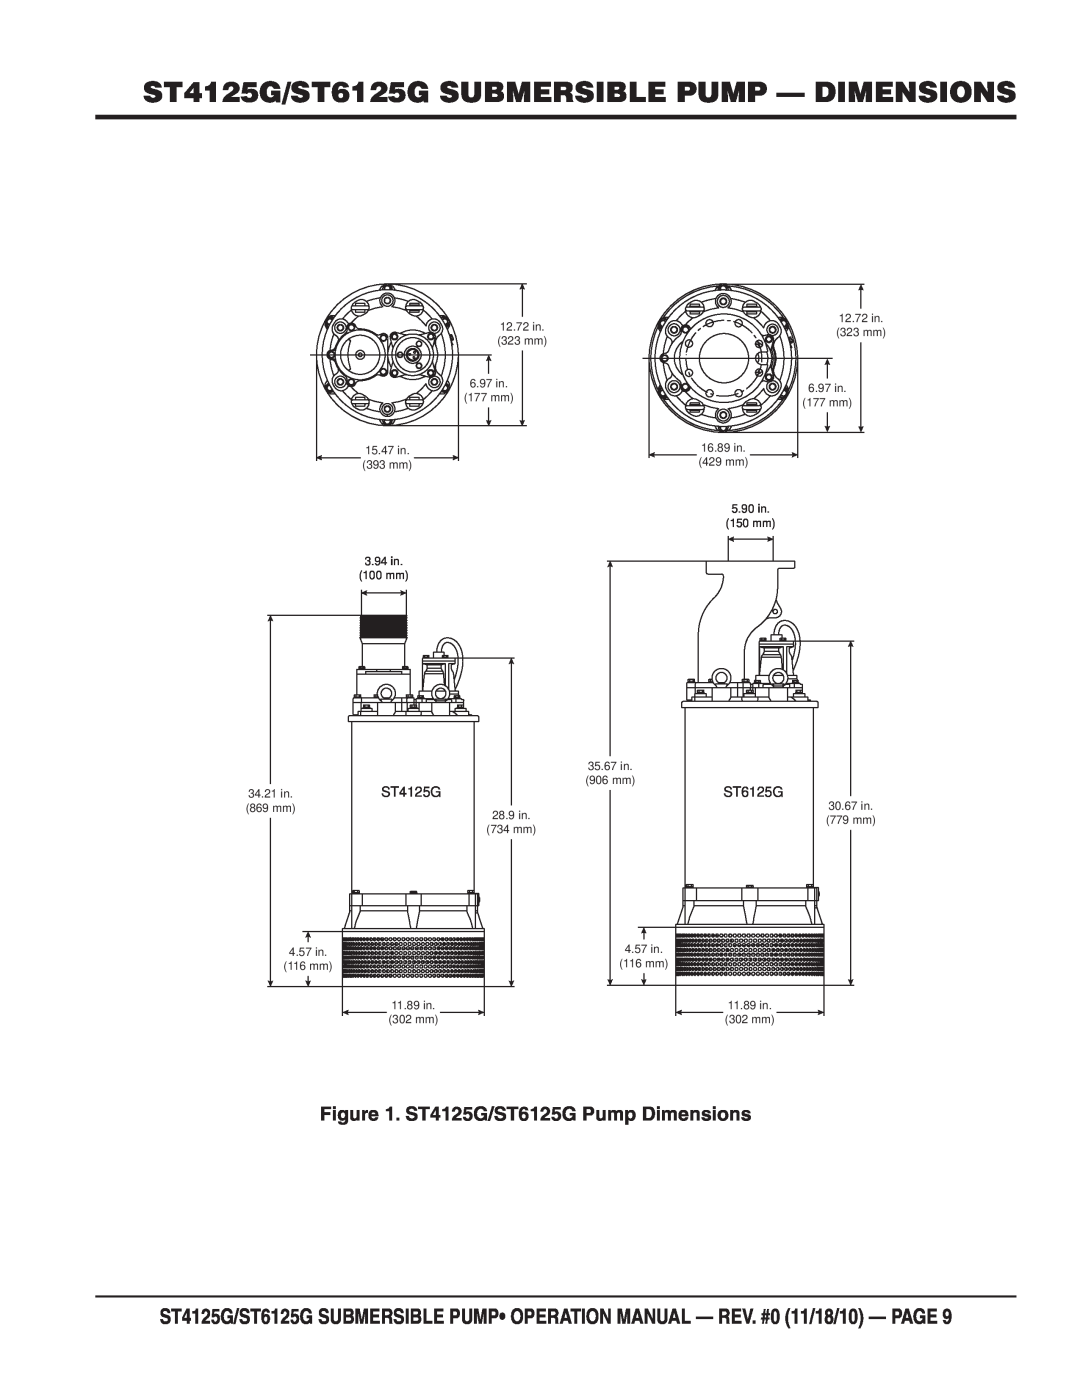 Multiquip operation manual ST4125G/ST6125G SUBMERSIBLE PUMP - DIMENSIONS, ST4125G/ST6125G Pump Dimensions 